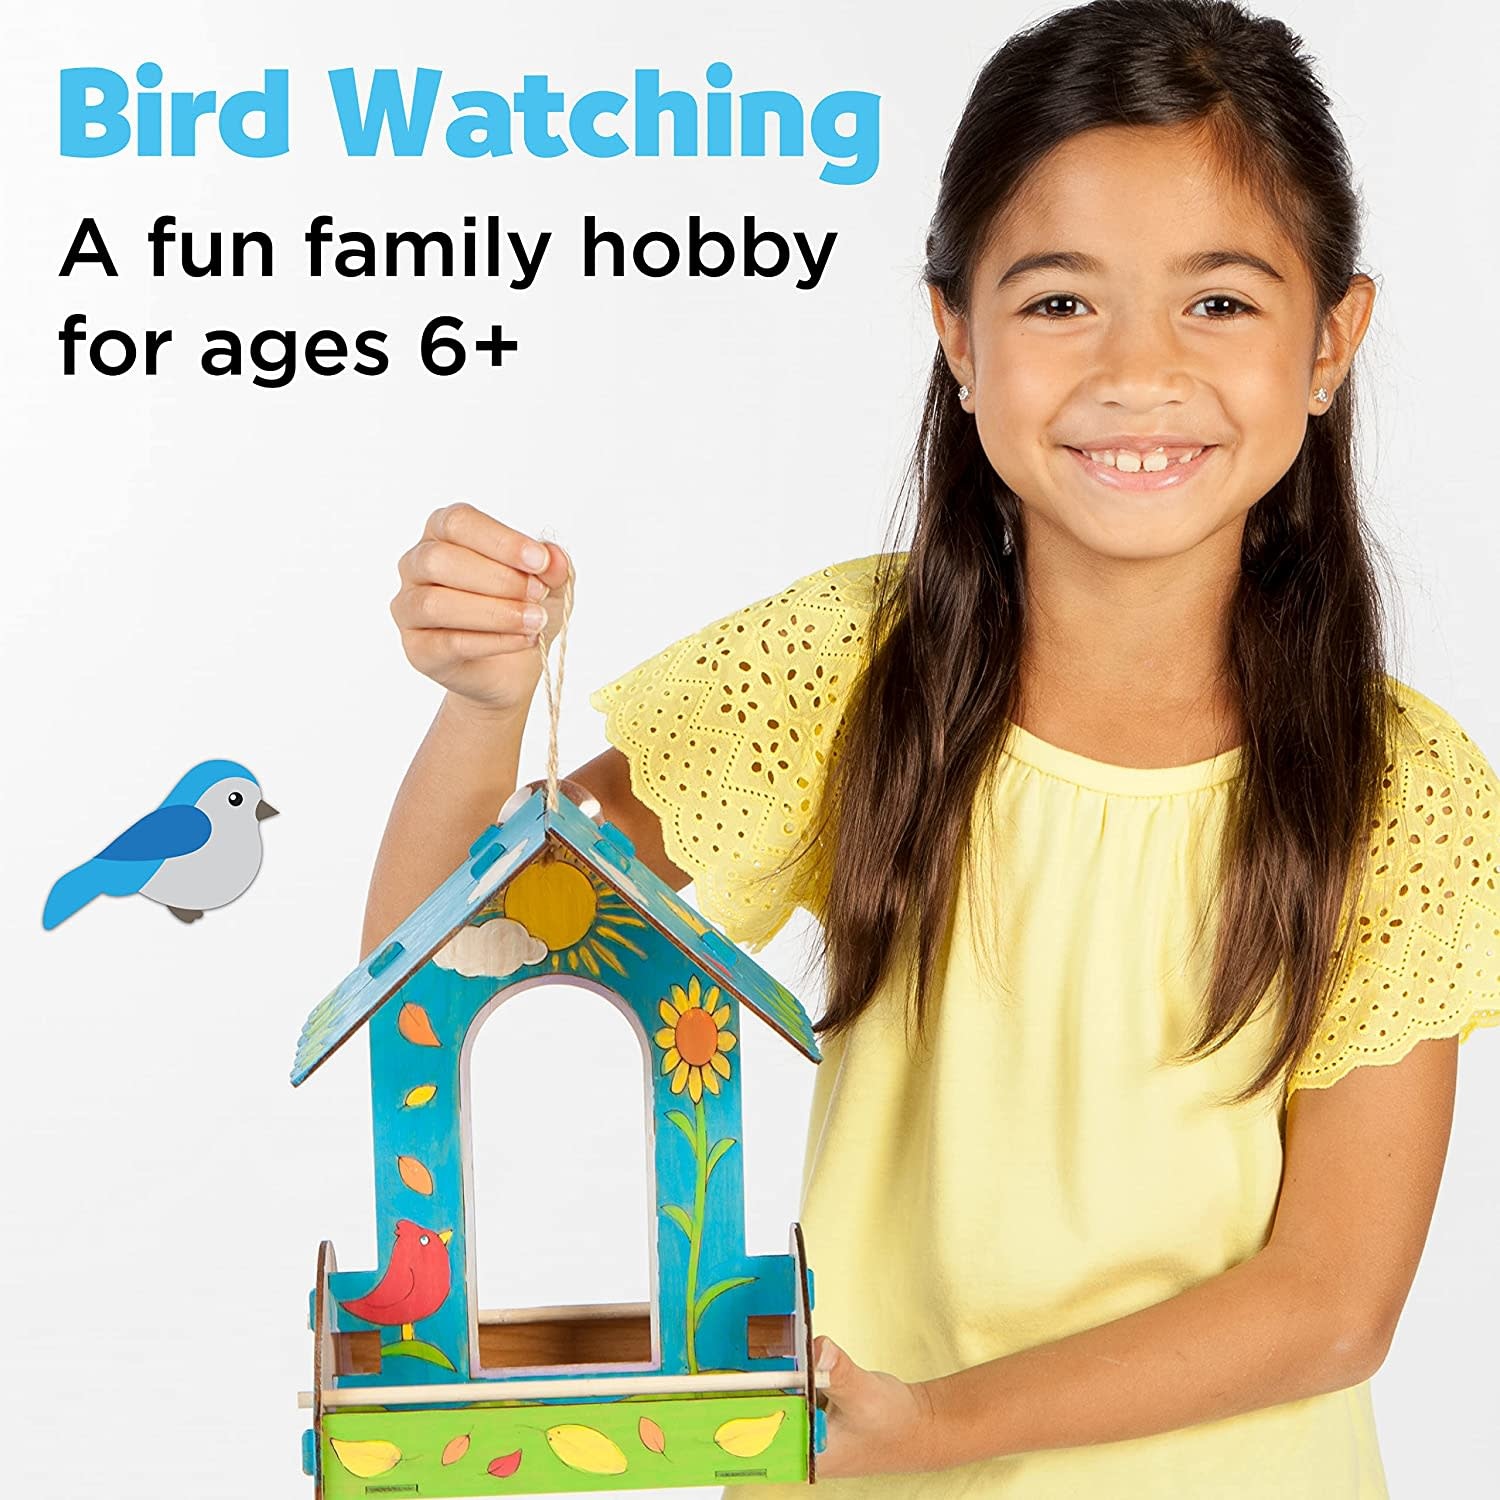 Creativity For Kids Build & Paint Bird Feeder